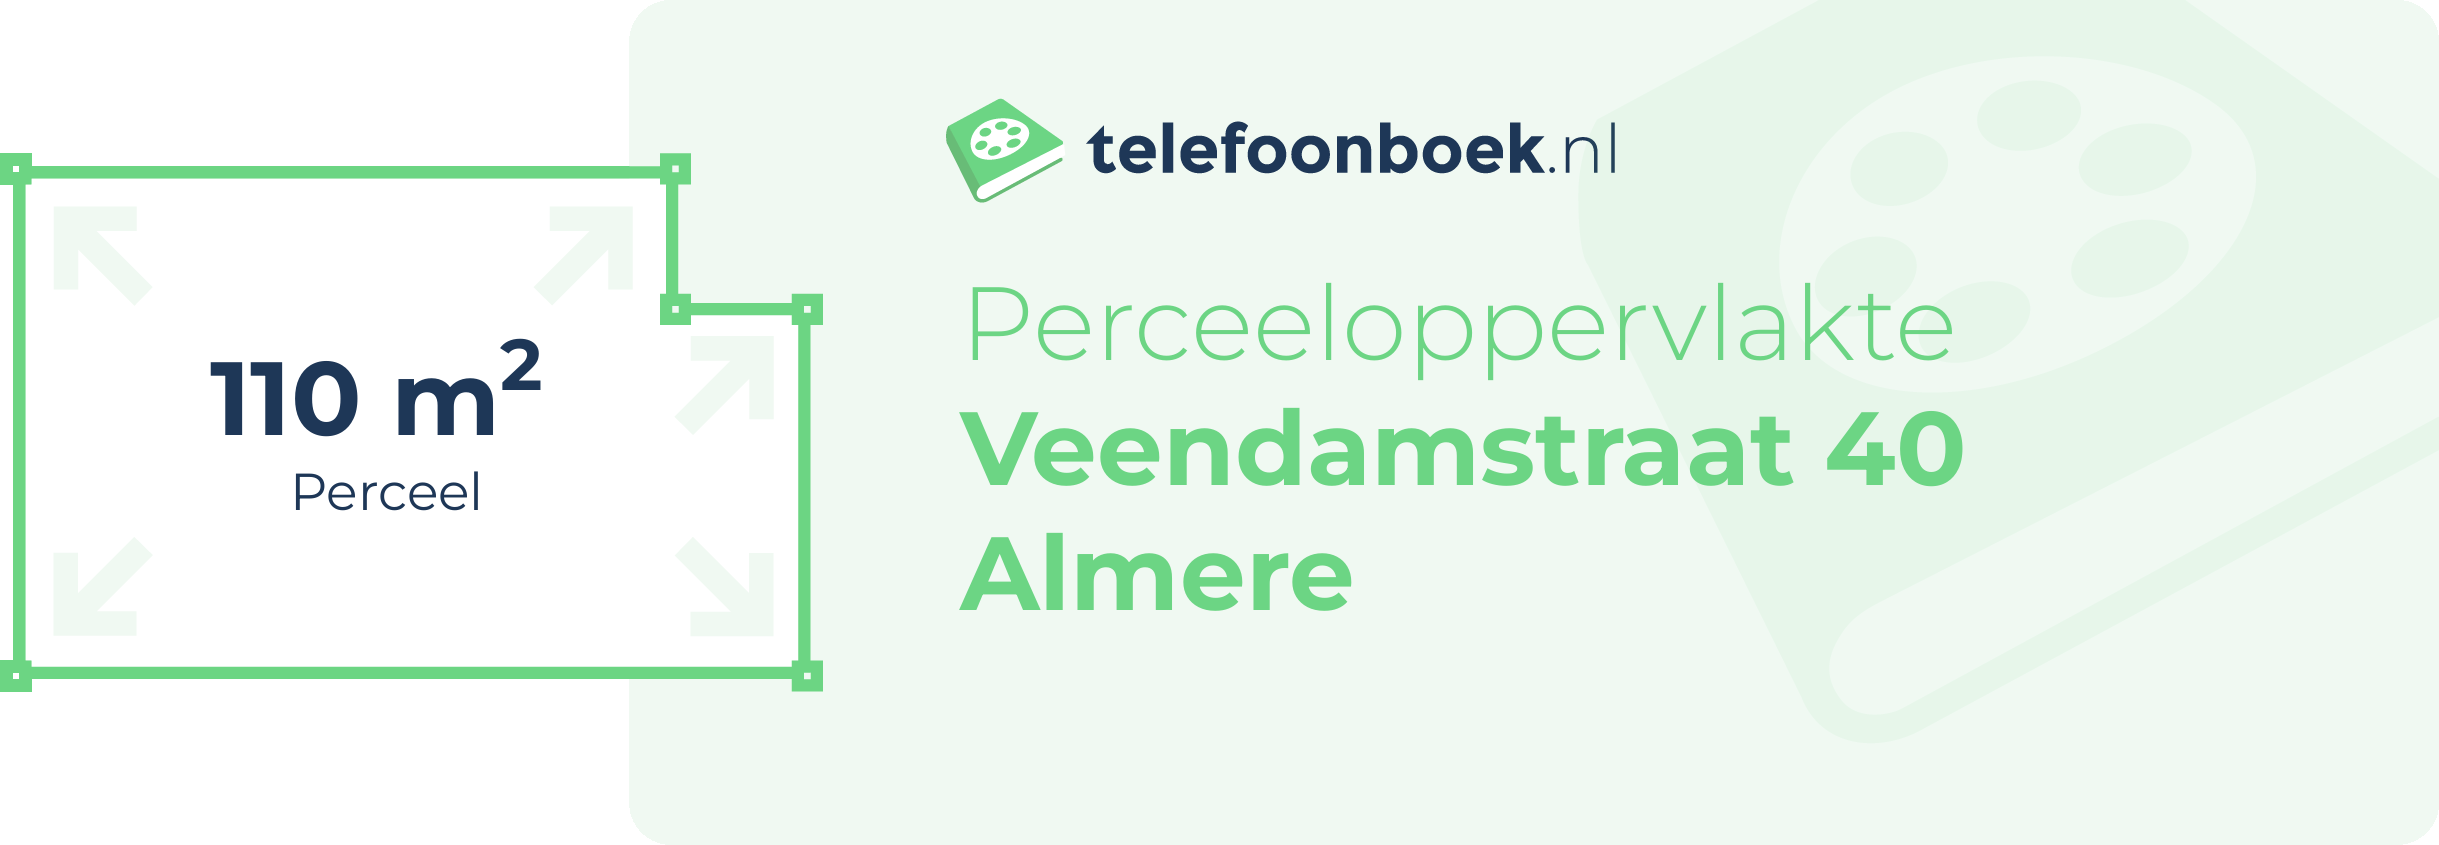 Perceeloppervlakte Veendamstraat 40 Almere